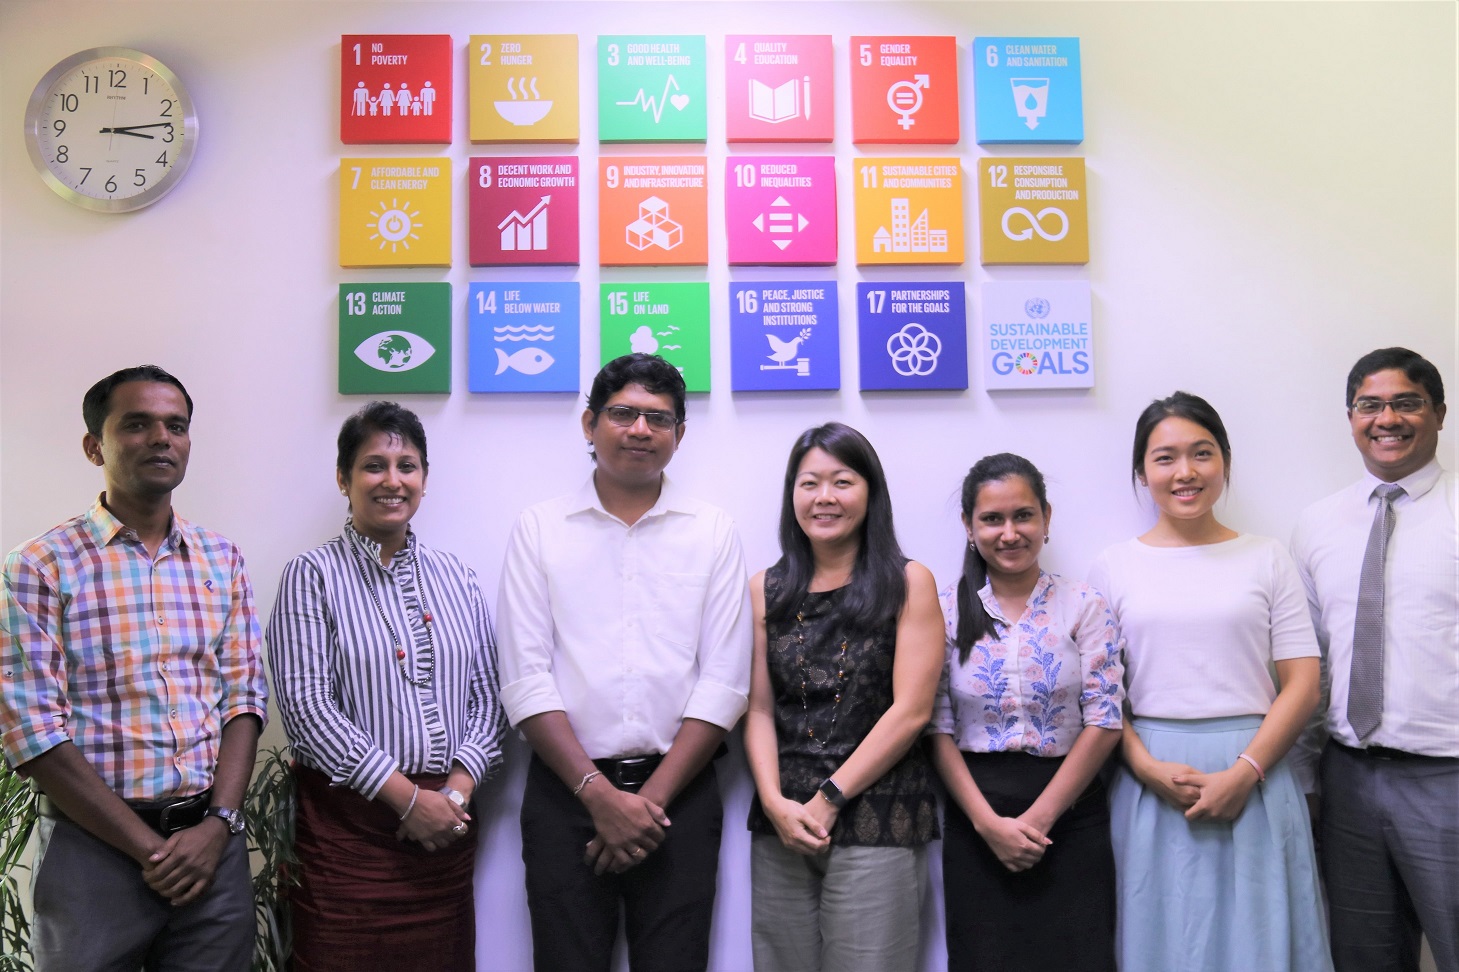 Meeting with UNFPA Sri Lanka Representative, Ms. Ritsu Nacken; Assistant Representative, Madhu Dissanayake and the Youth team at UNFPA